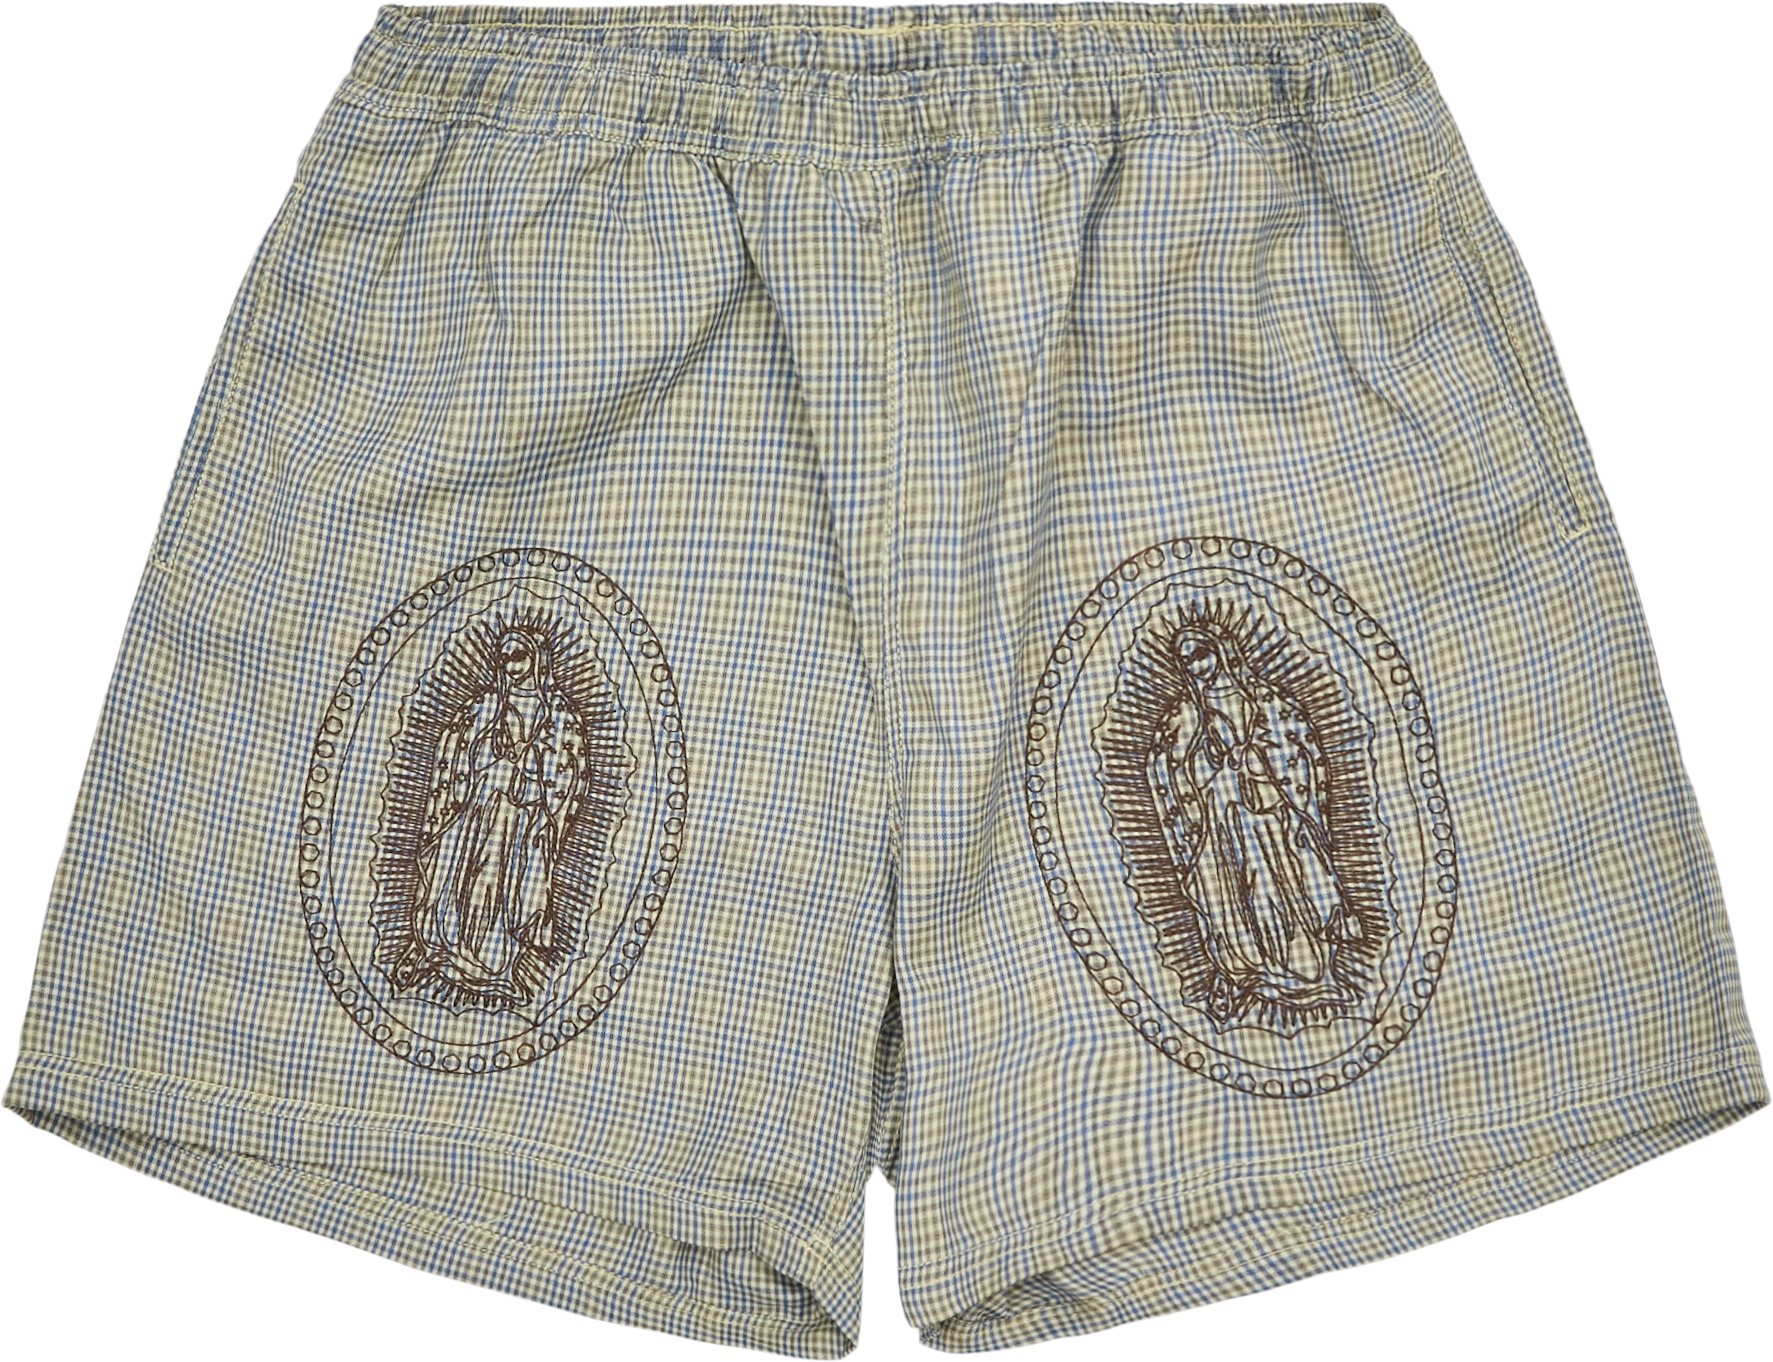 Blessed Shorts - Shorts - Regular fit - Grön